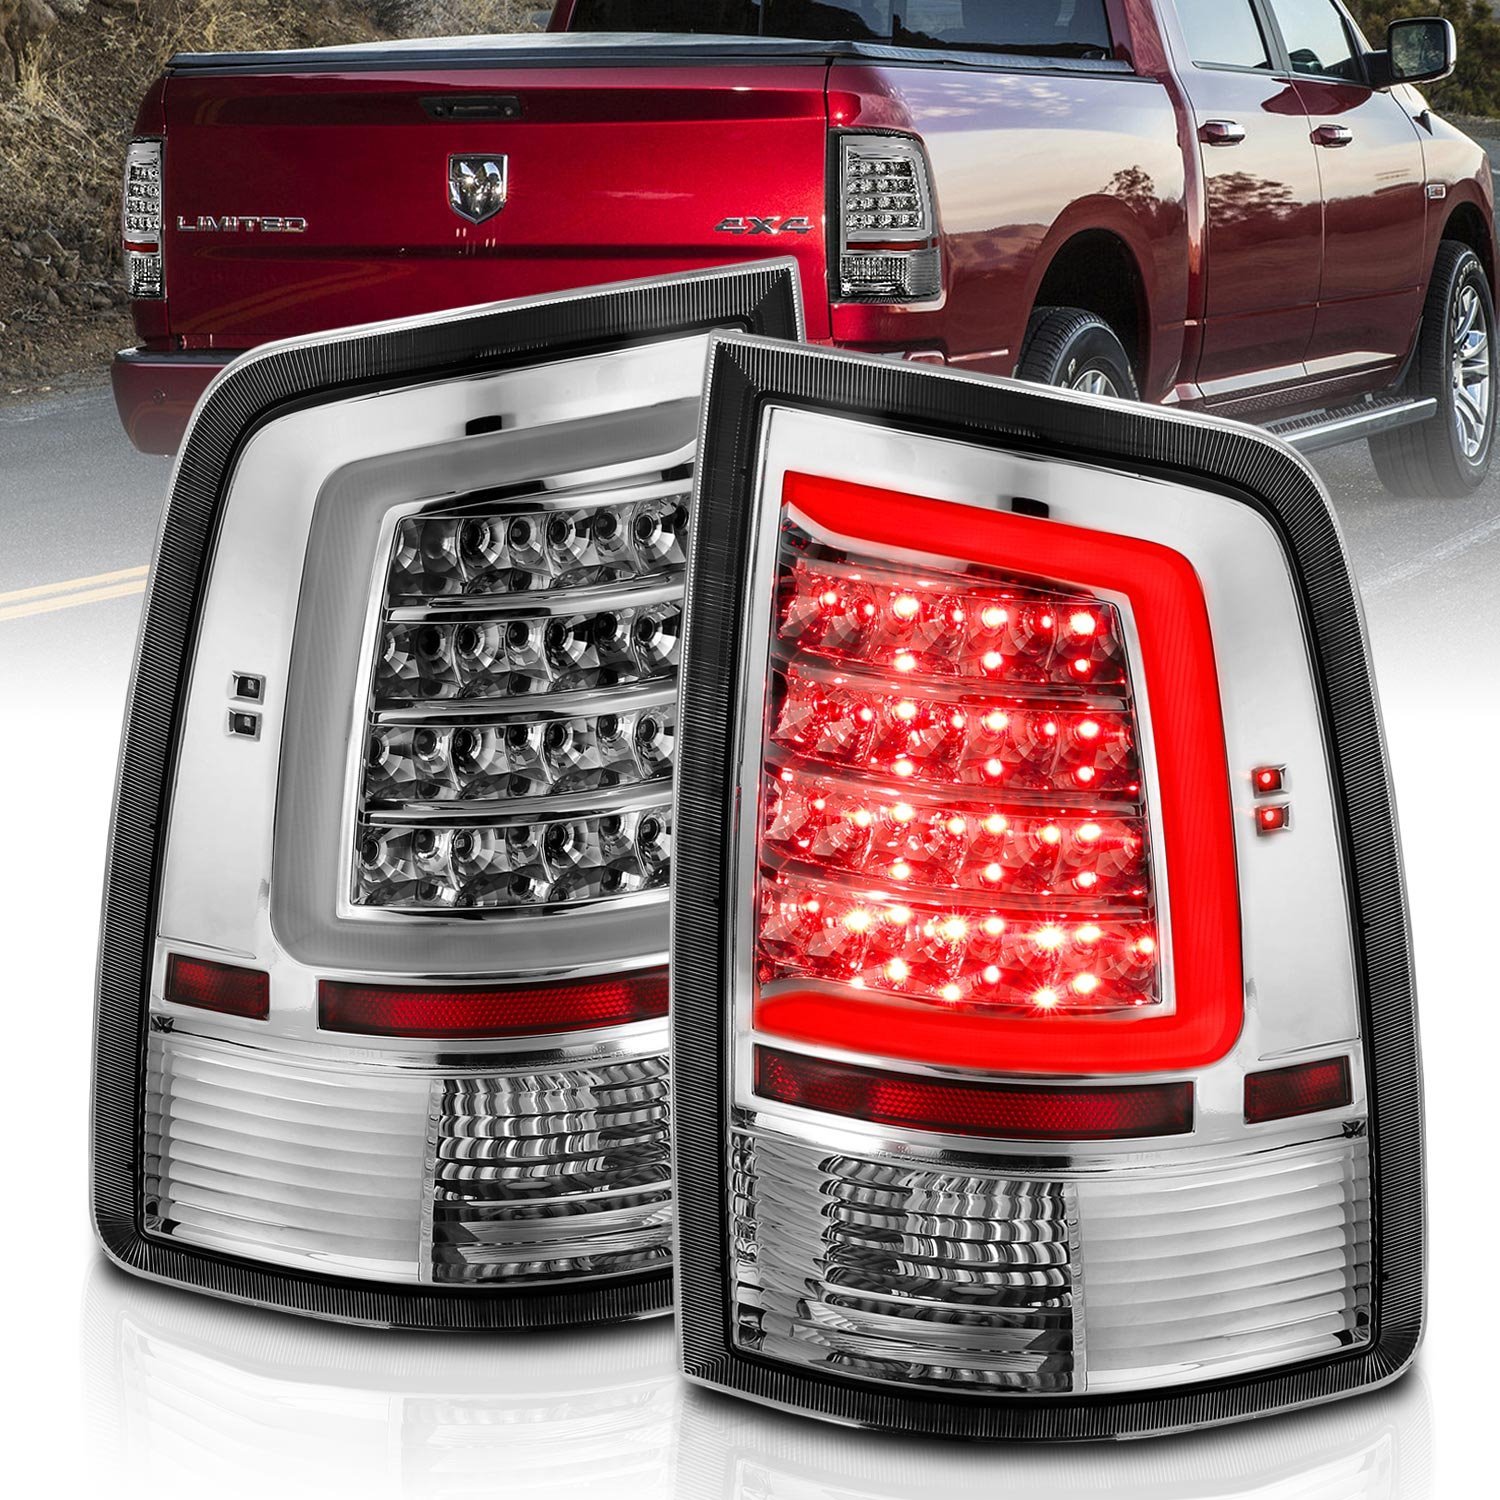 311320 Chrome LED C-Bar Taillights Fits Select 2009-2018 Ram 1500, 2500, 3500 Trucks [Non-OE LED]